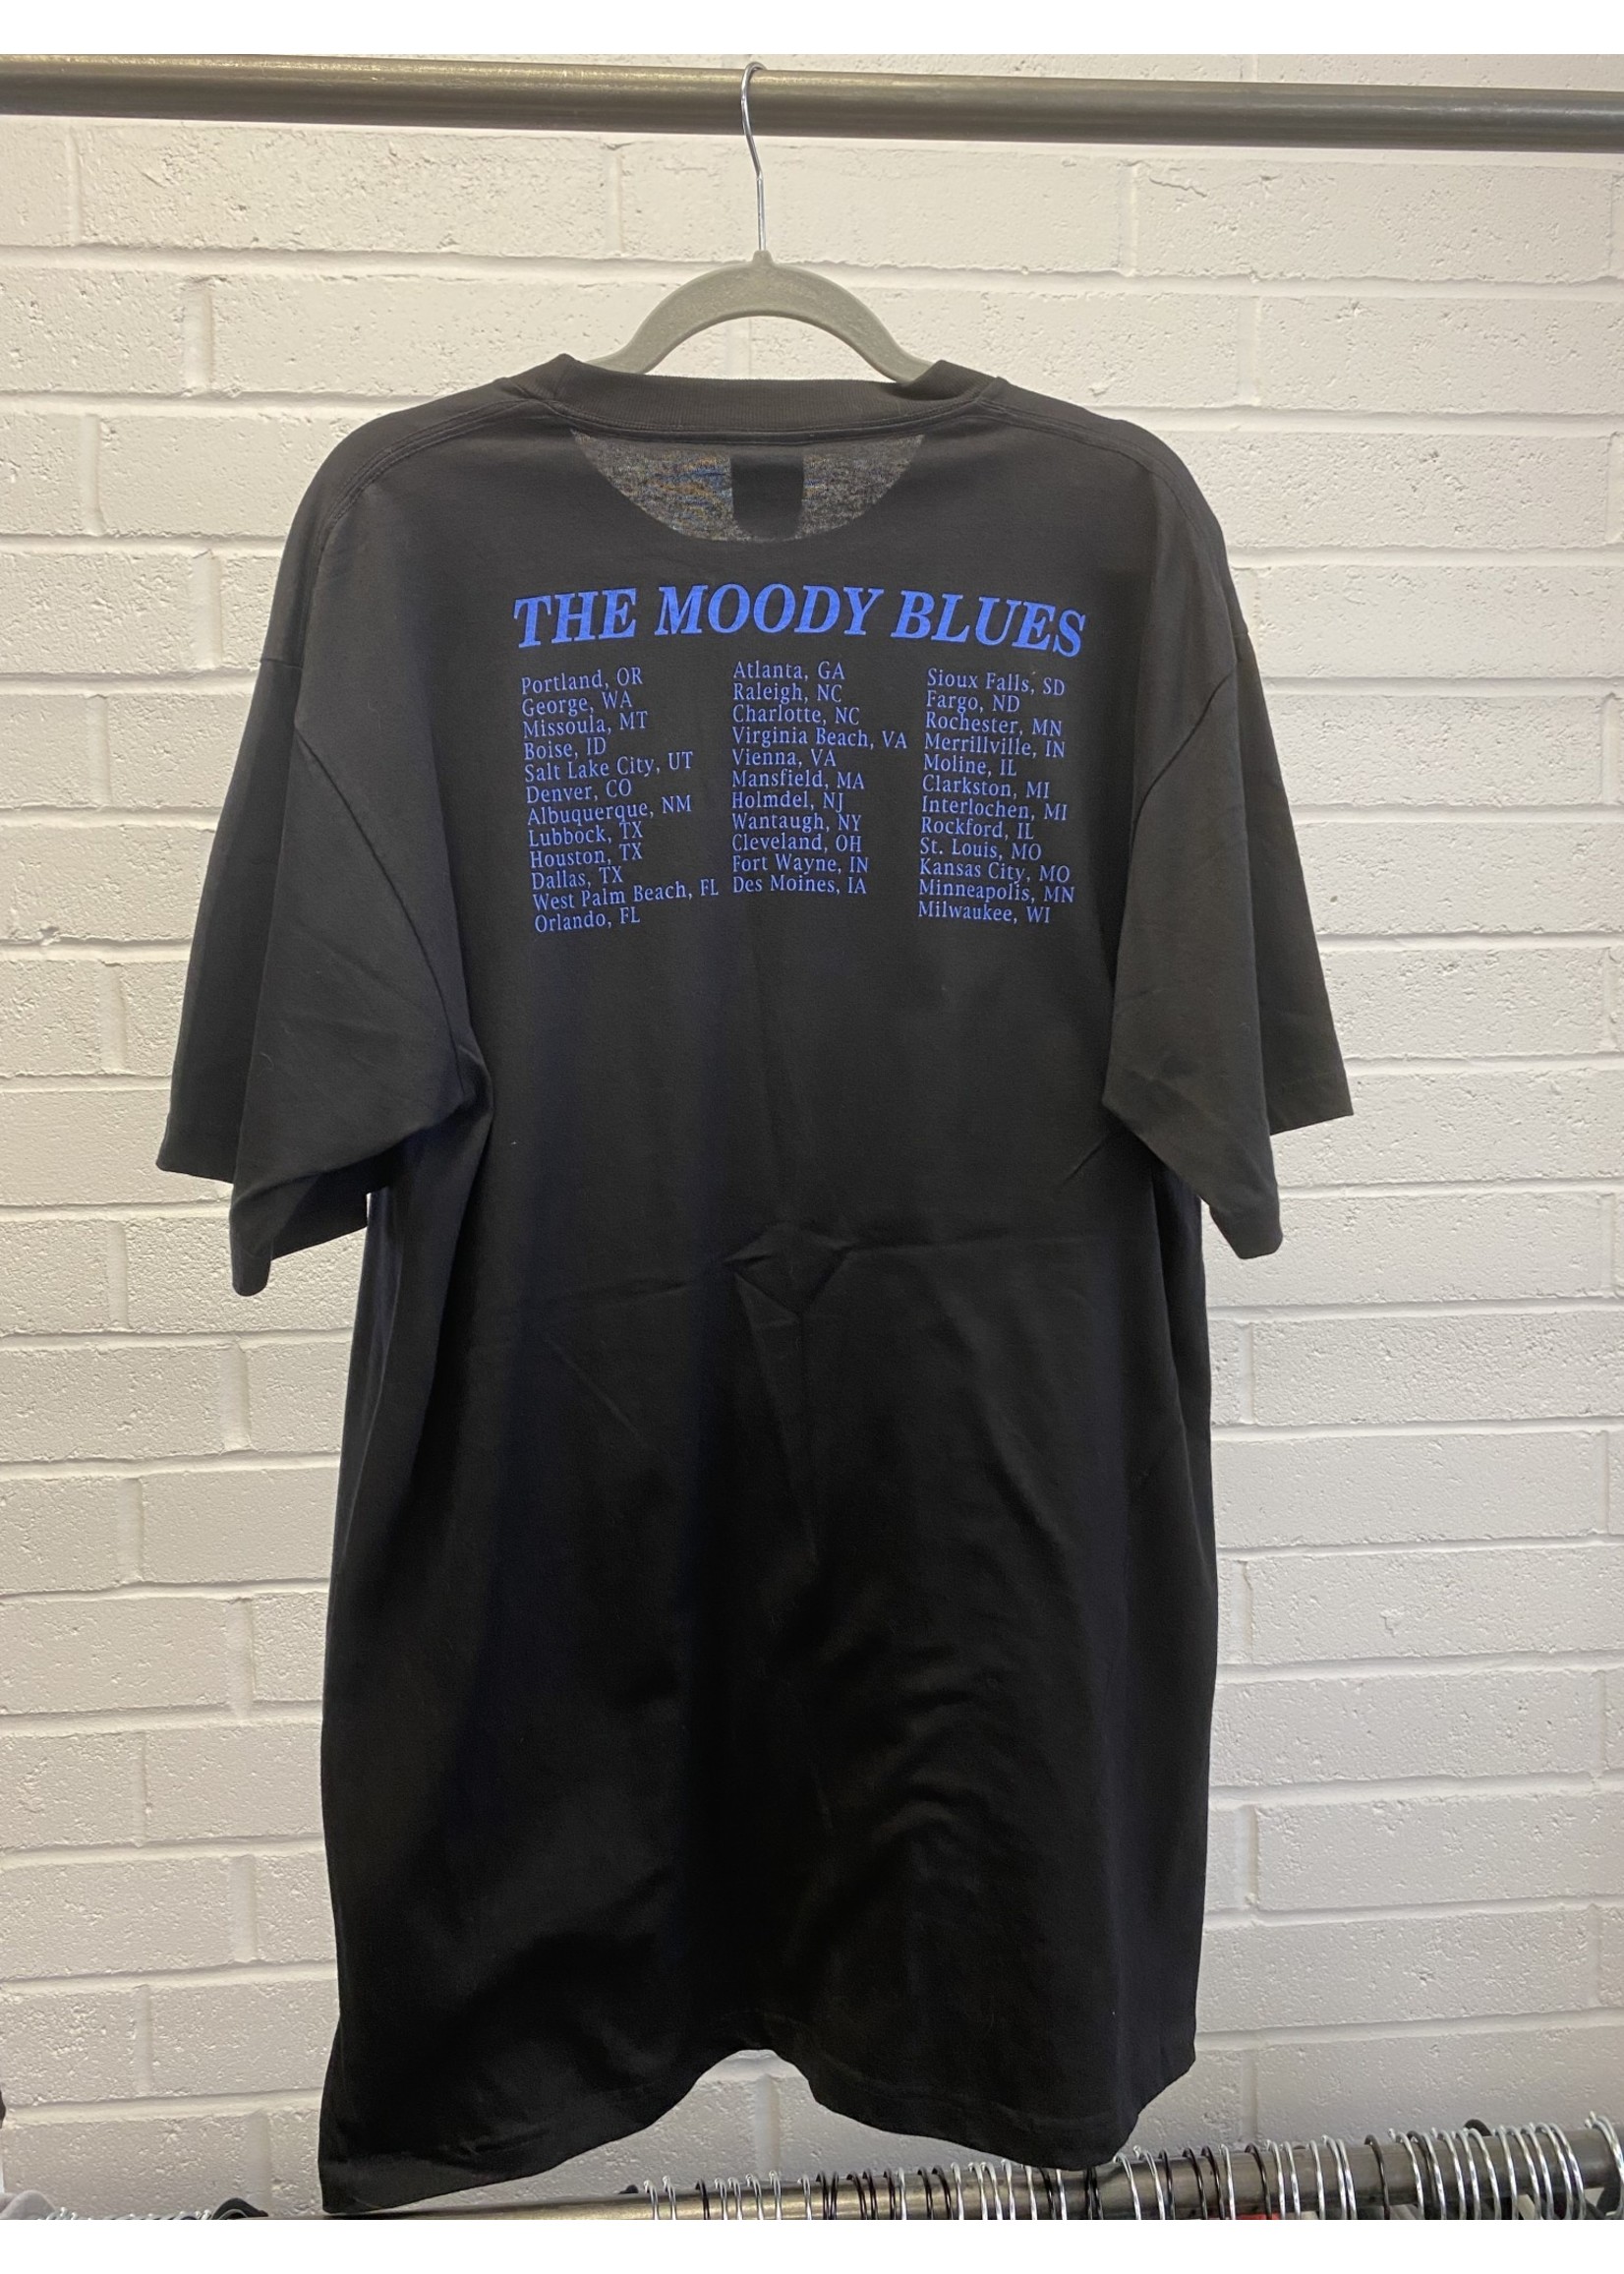 Vintage Moody Blues Band Tee. Size XL.